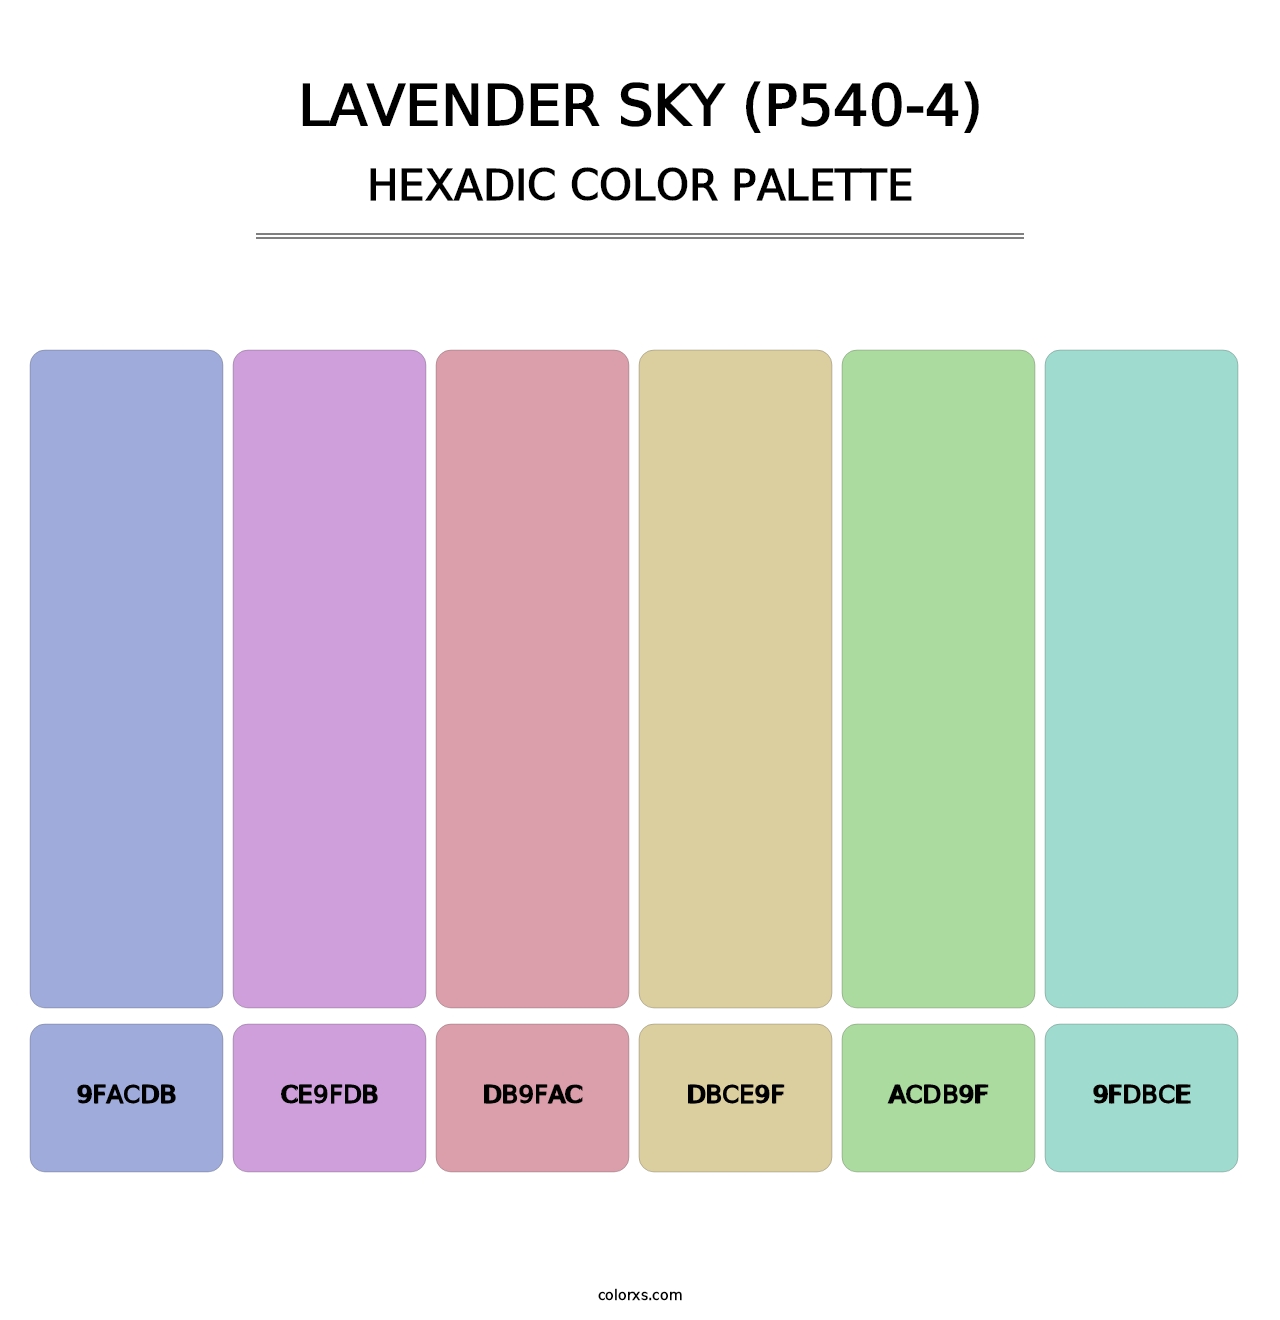 Lavender Sky (P540-4) - Hexadic Color Palette